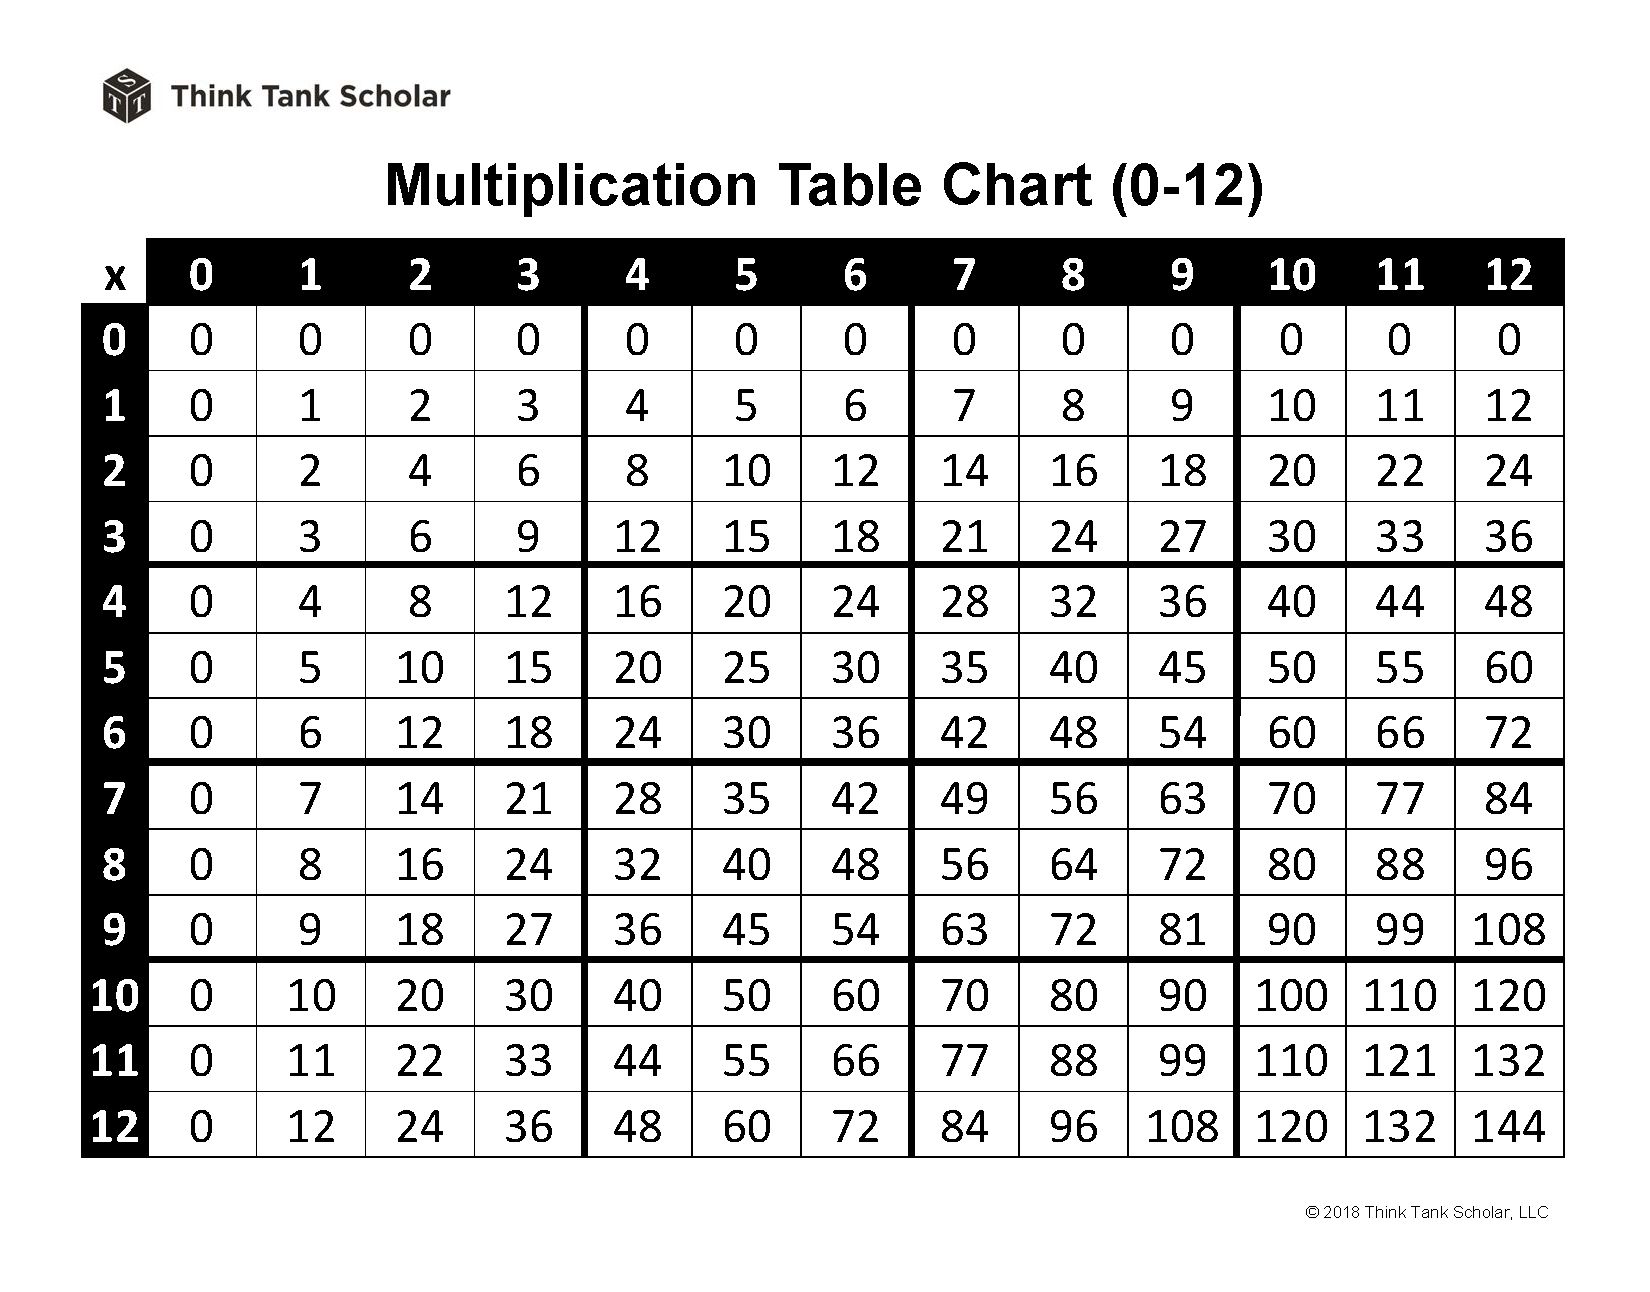 hat-s-g-ill-zi-k-lt-szet-multiplication-tables-from-1-to-20-pdf-wildscat